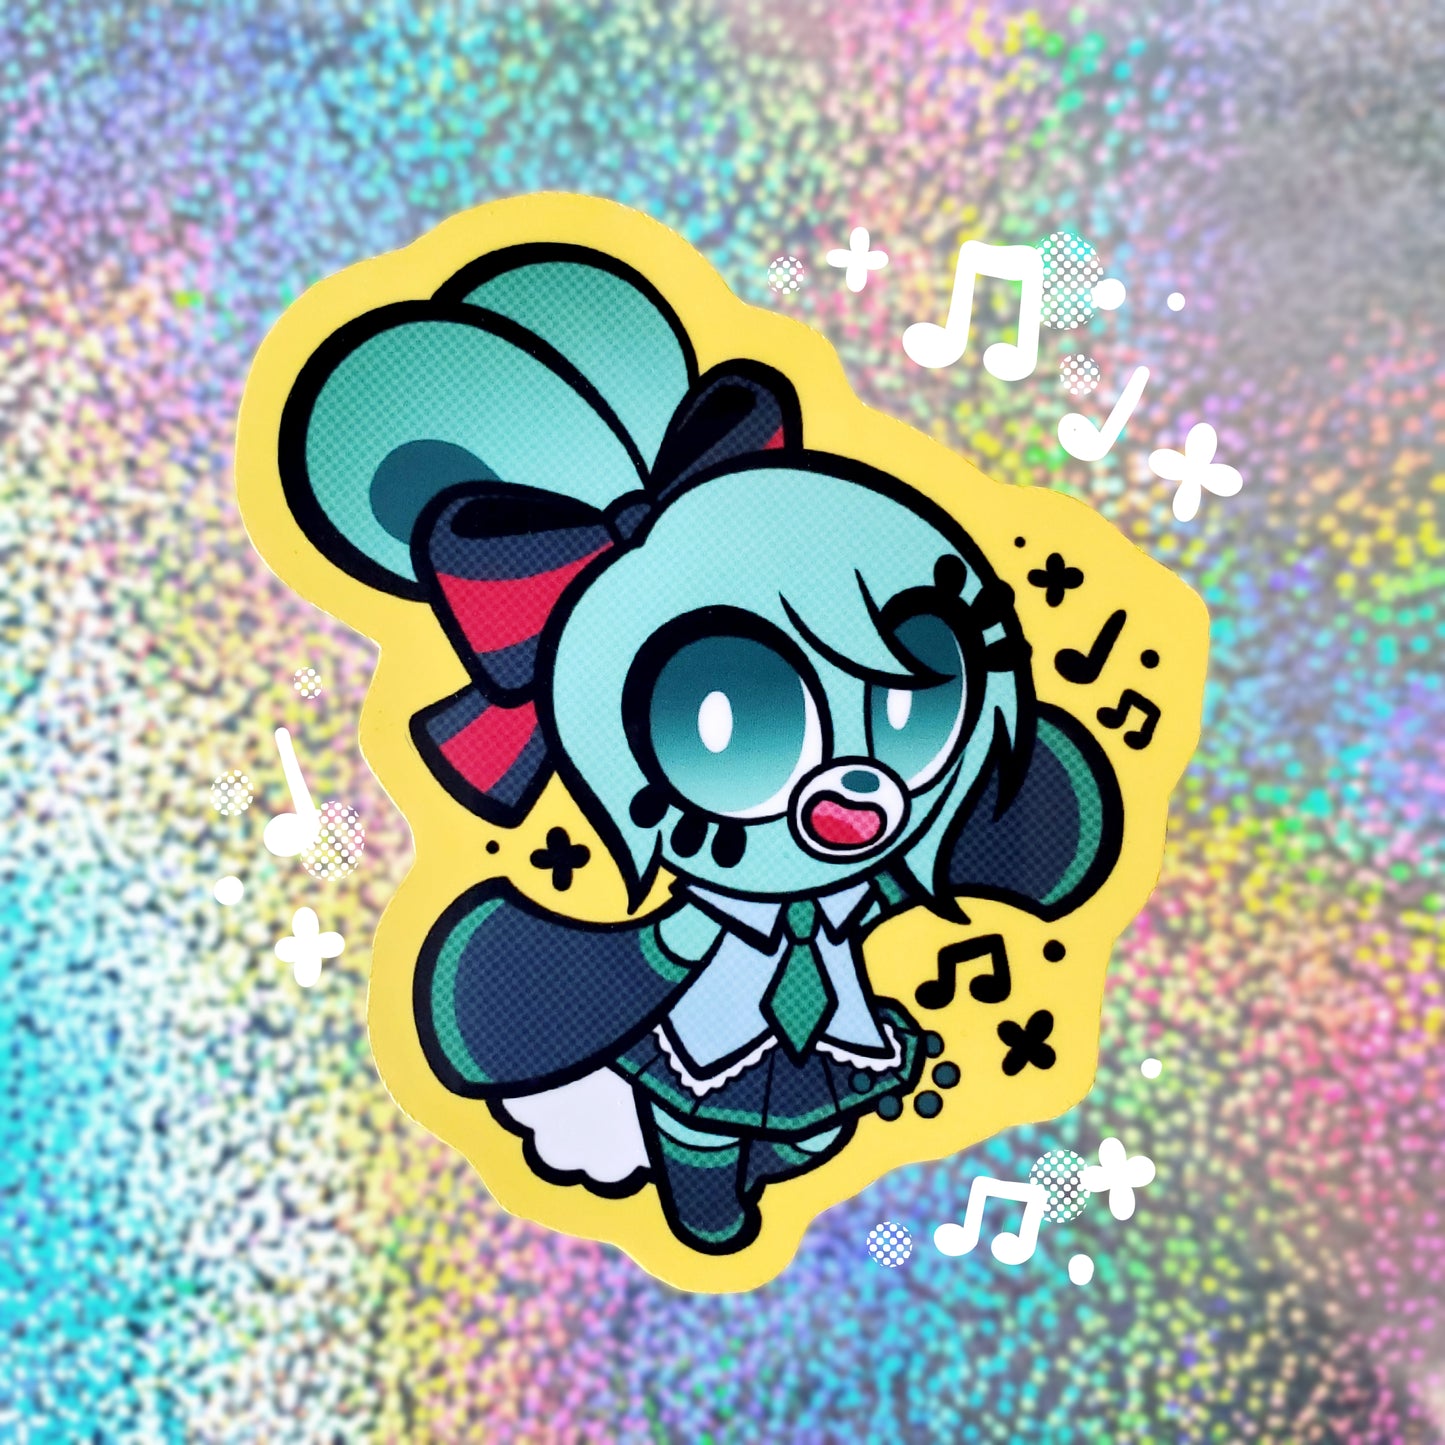 "Hopsune Miku" Vinyl Sticker